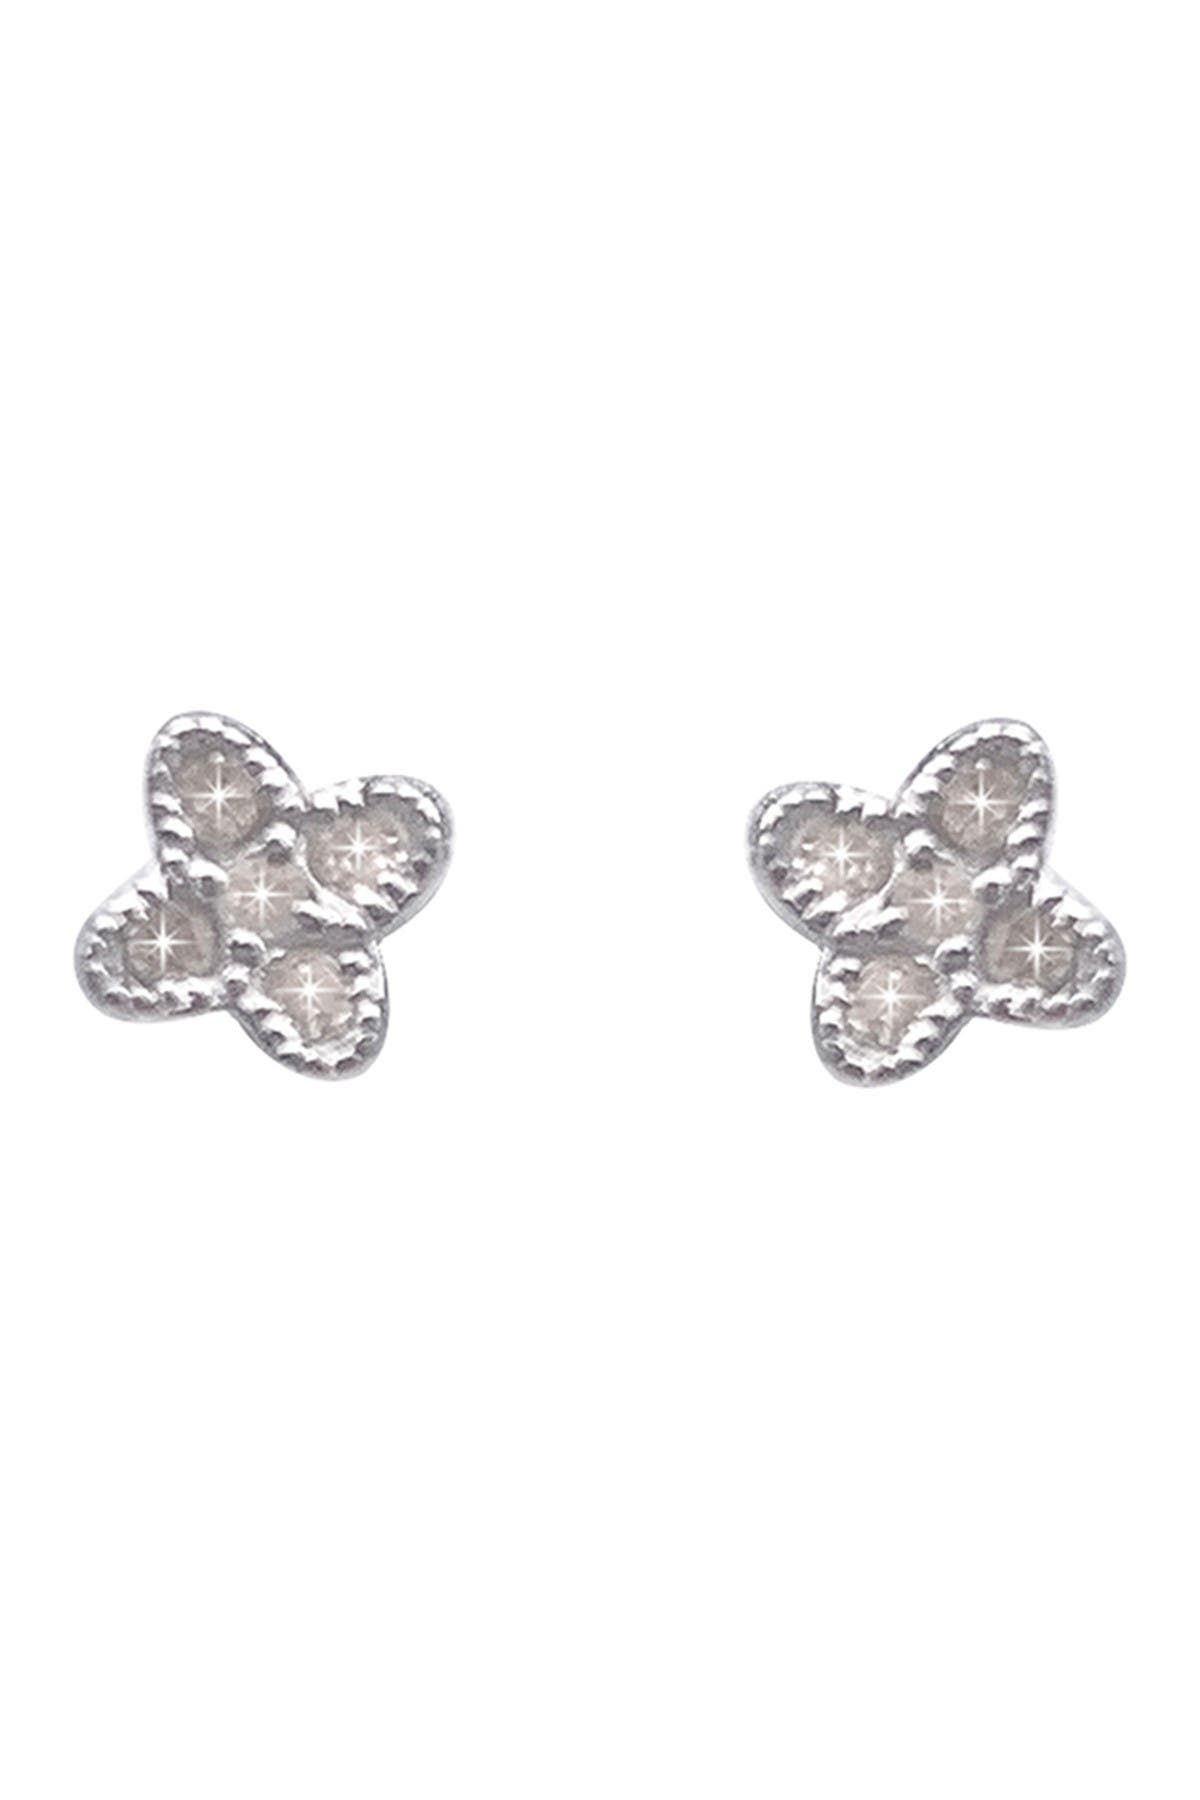 Adornia Fine White Rhodium Plated Sterling Silver Diamond Clover Stud Earrings